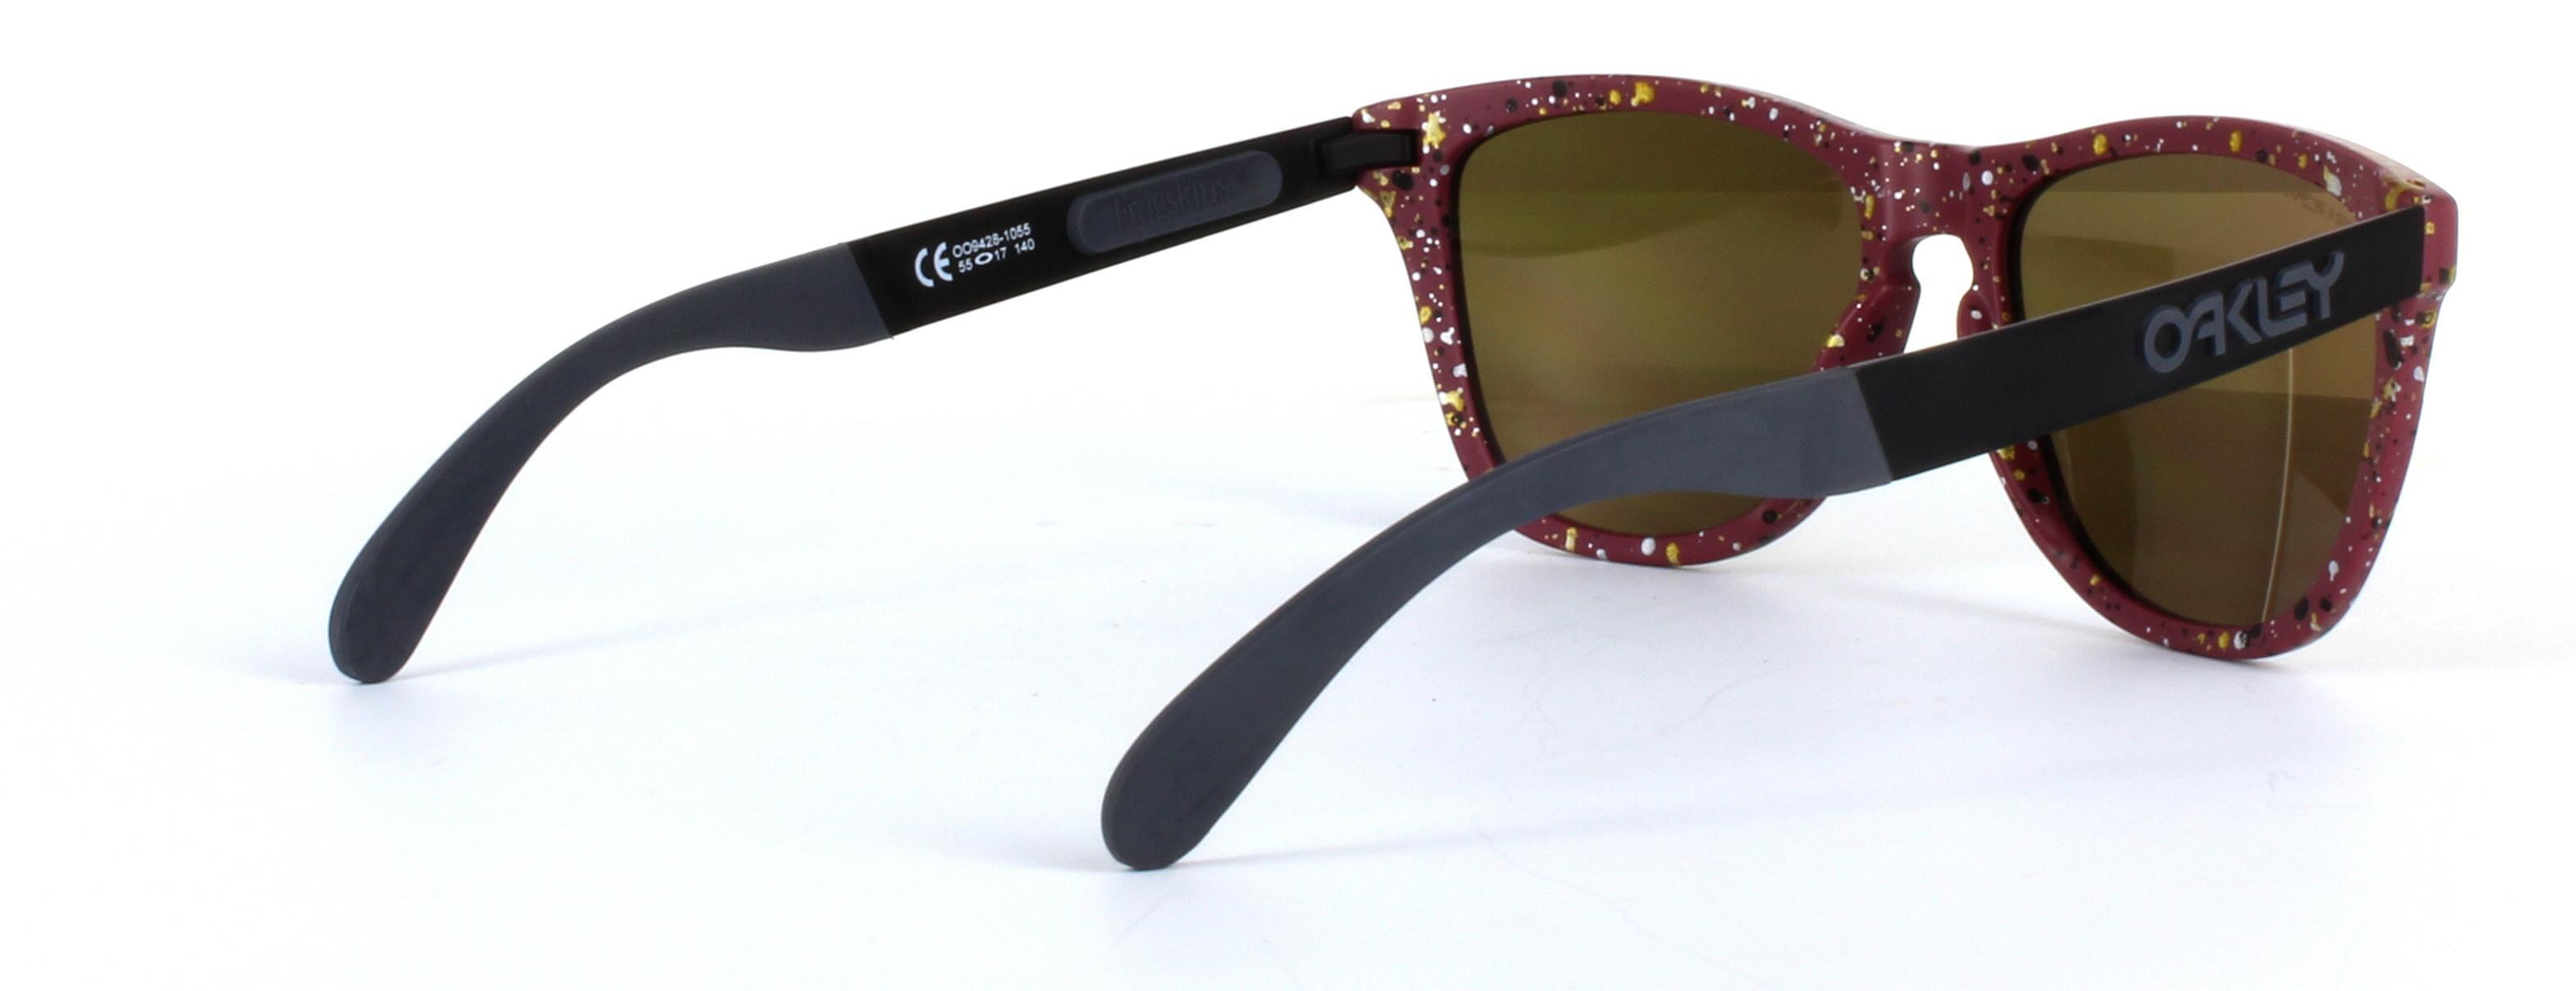 Oakley (O9428) Red Full Rim Rectangular Plastic Prescription Sunglasses - Image View 4